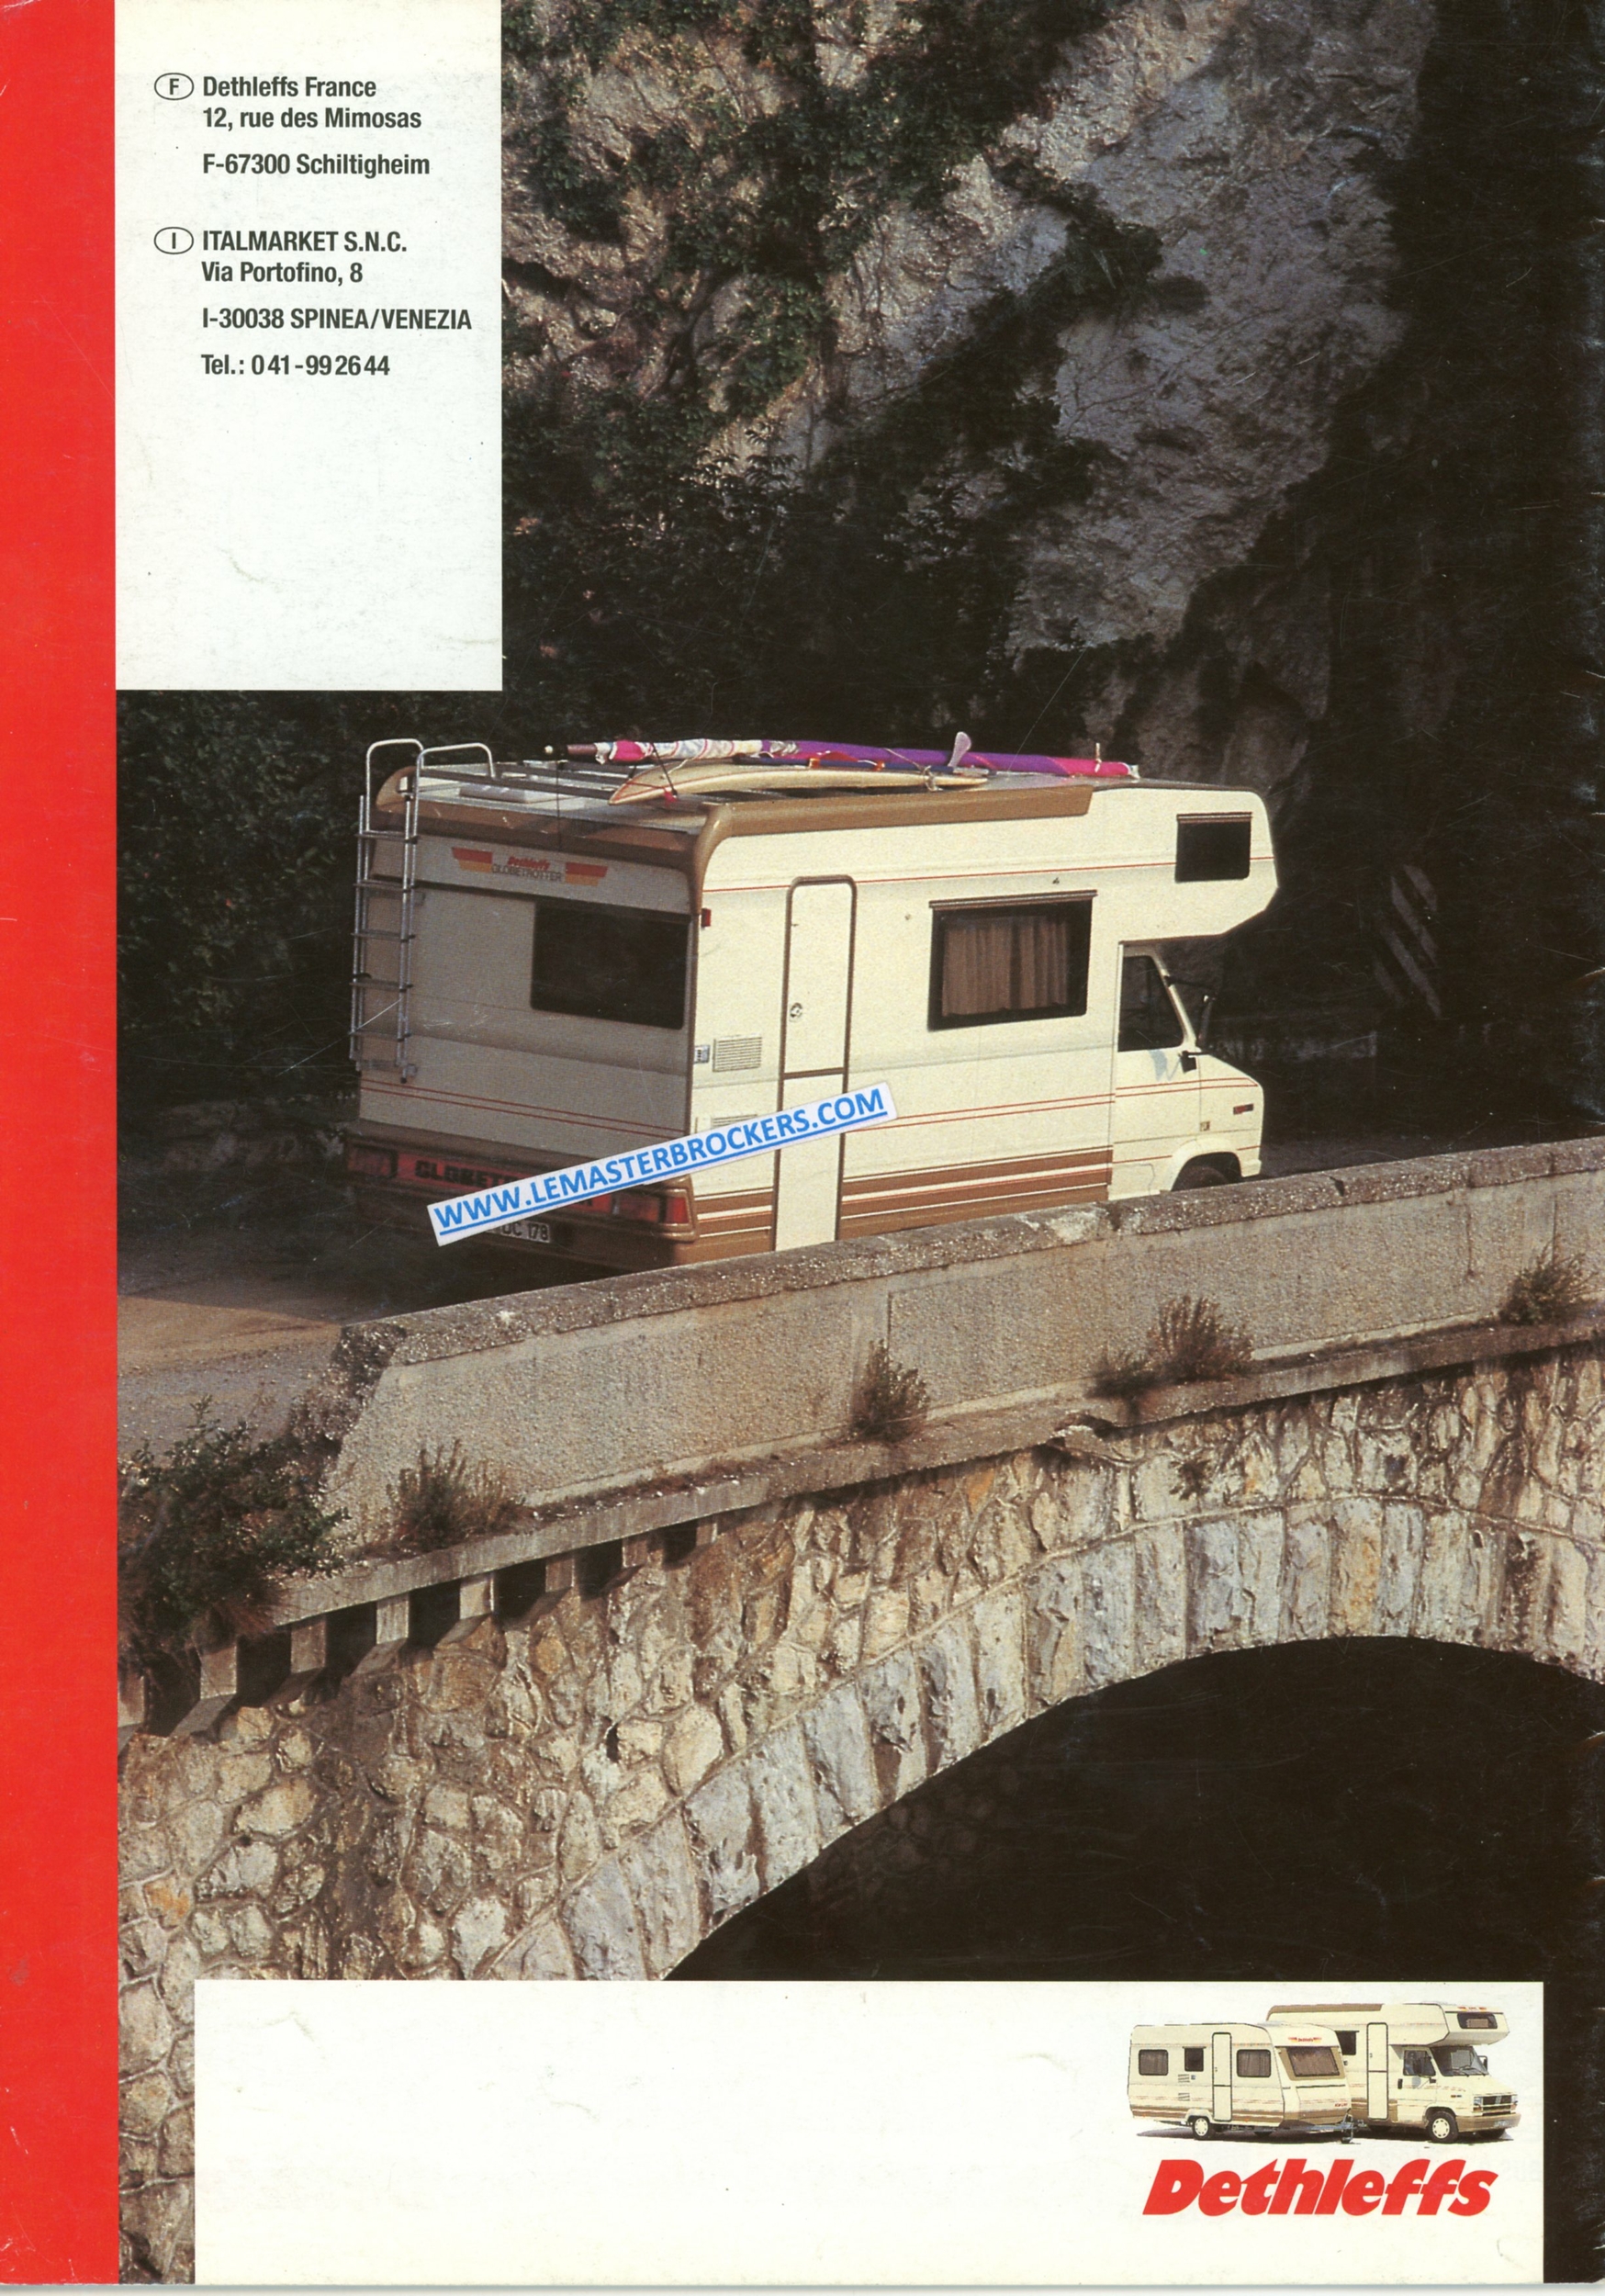 DETHLEFFS-BUS-GLOBETROTTER-1989-LEMASTERBROCKERS-CATALOGUE-PROSPECTUS-CAMPING-CAR-vintage